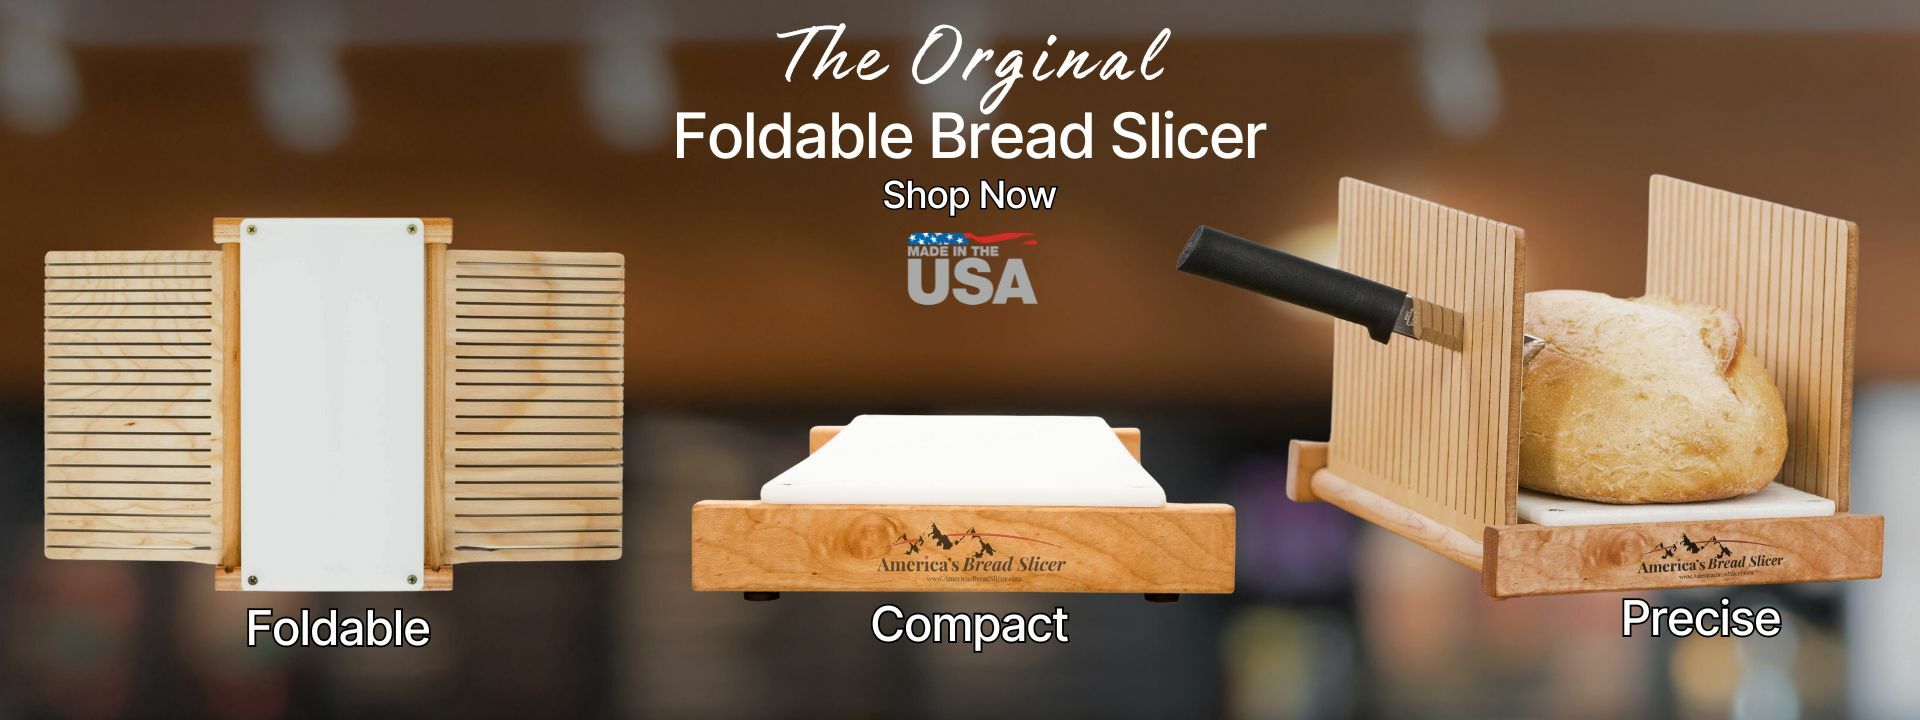 Foldable bread slicer